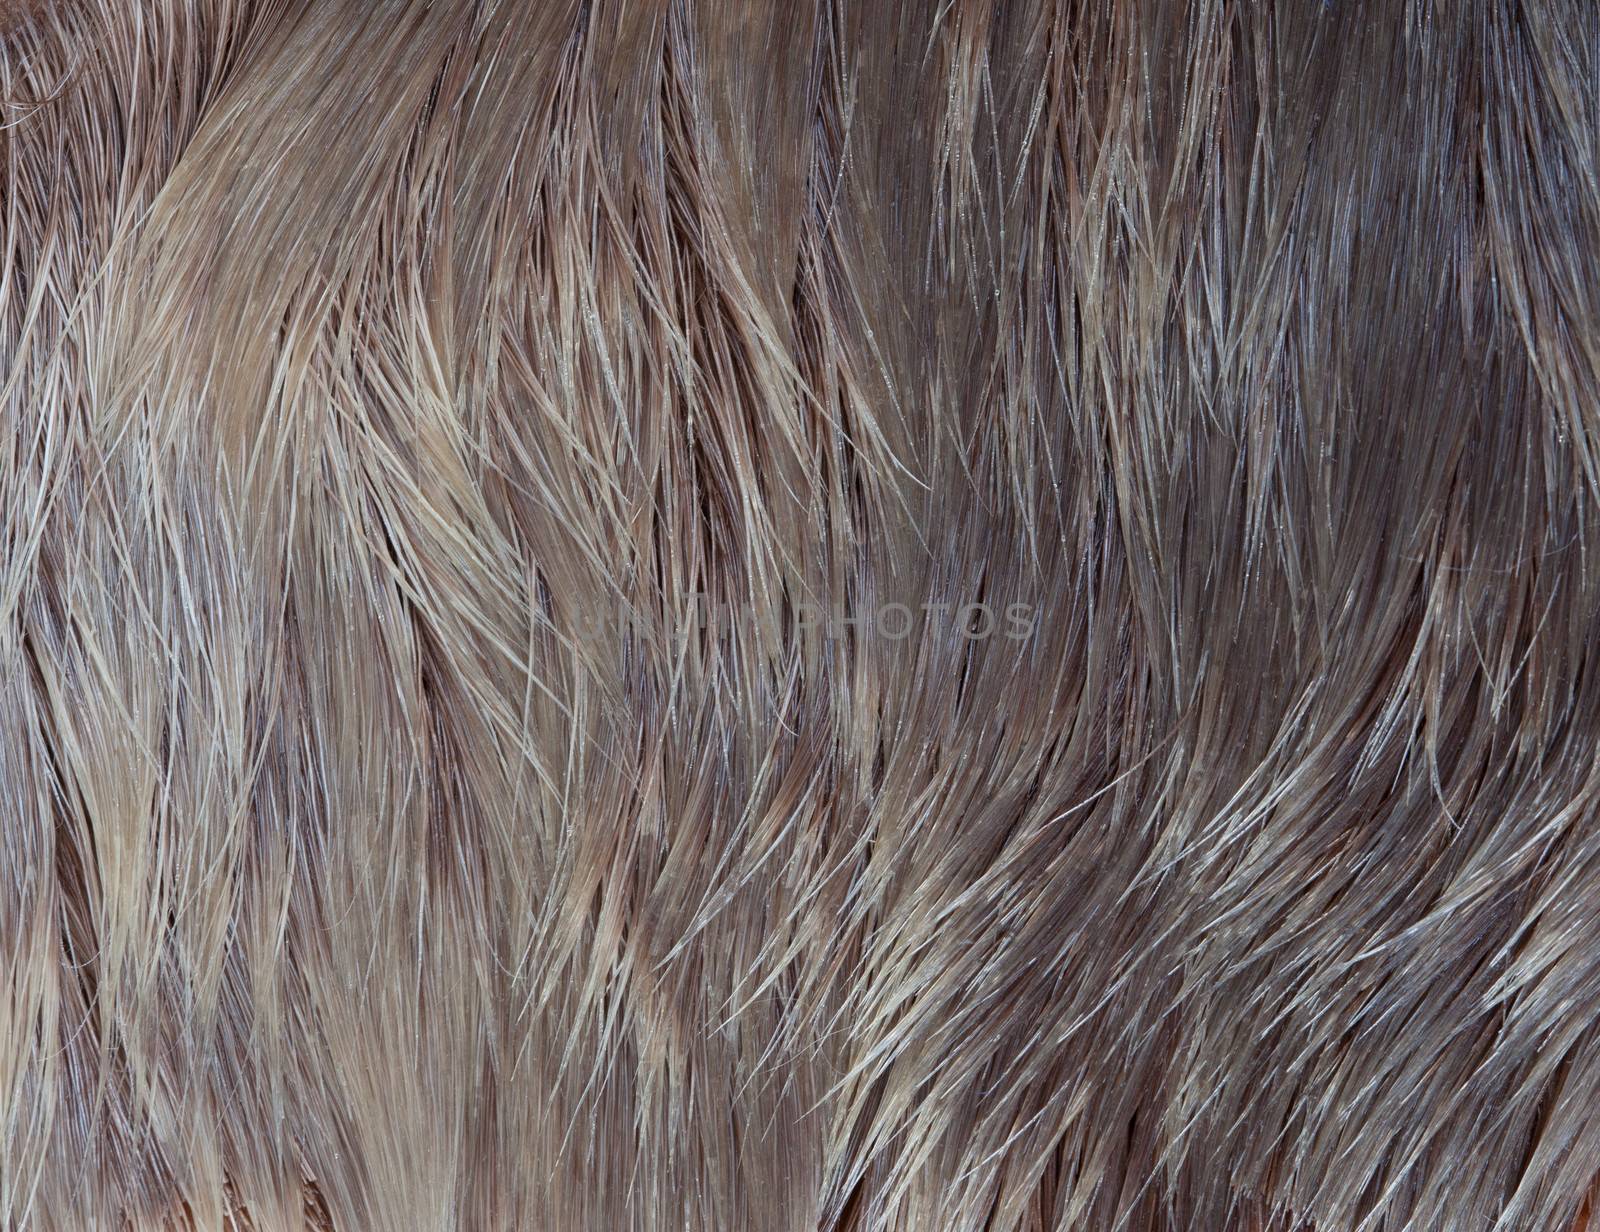 Elk fur close-up. brown, yellow, gray, silver color. 